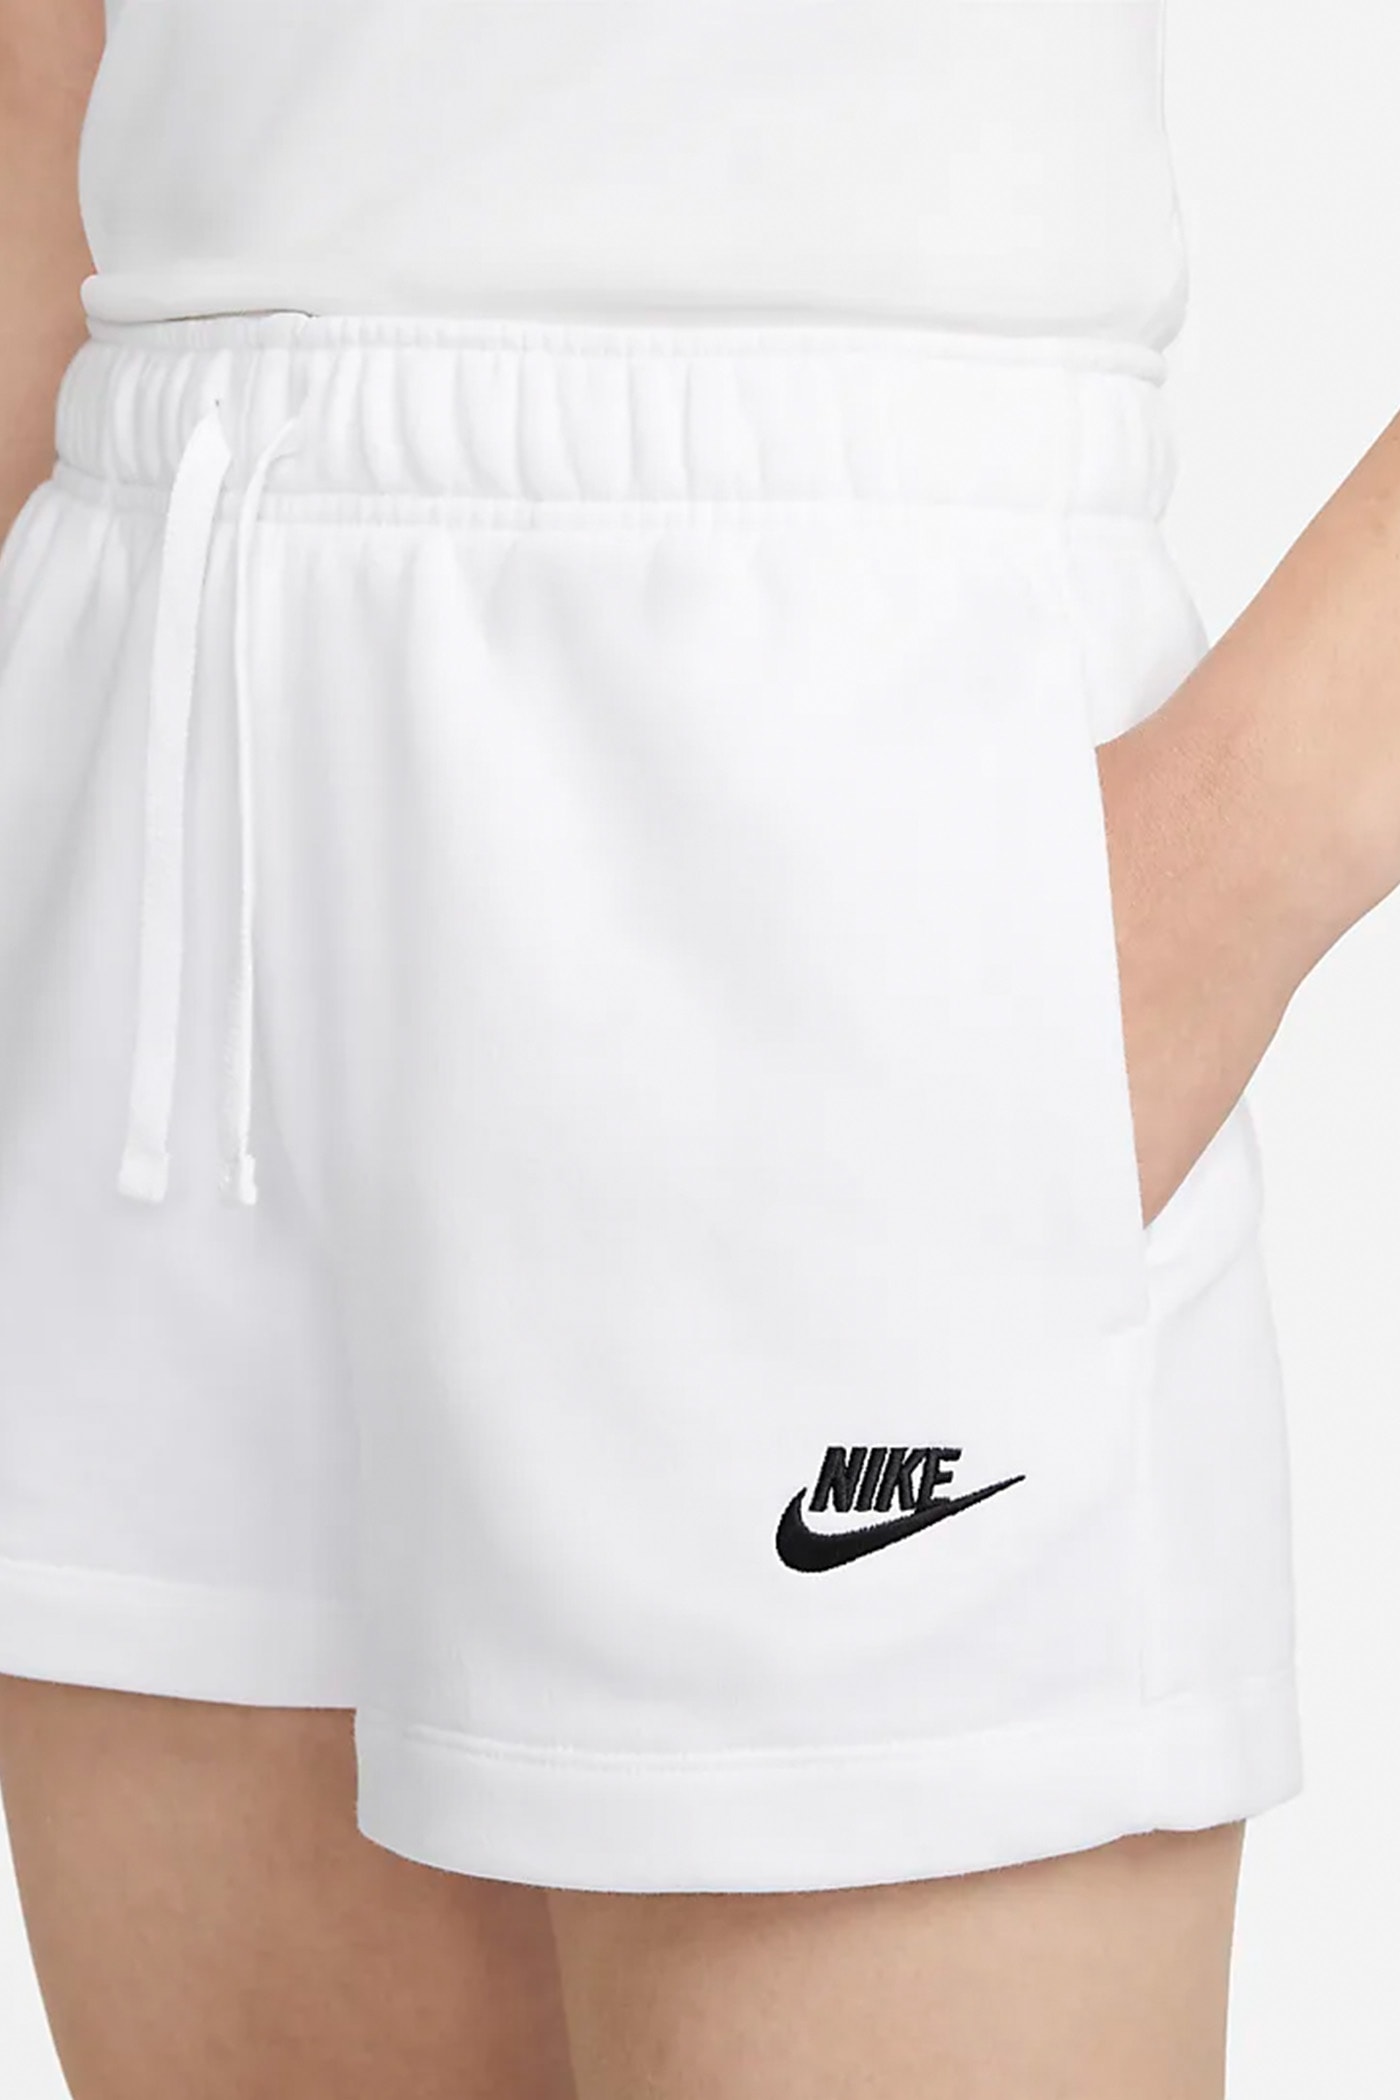 Nike Best Back to School Basics sweats tshirts